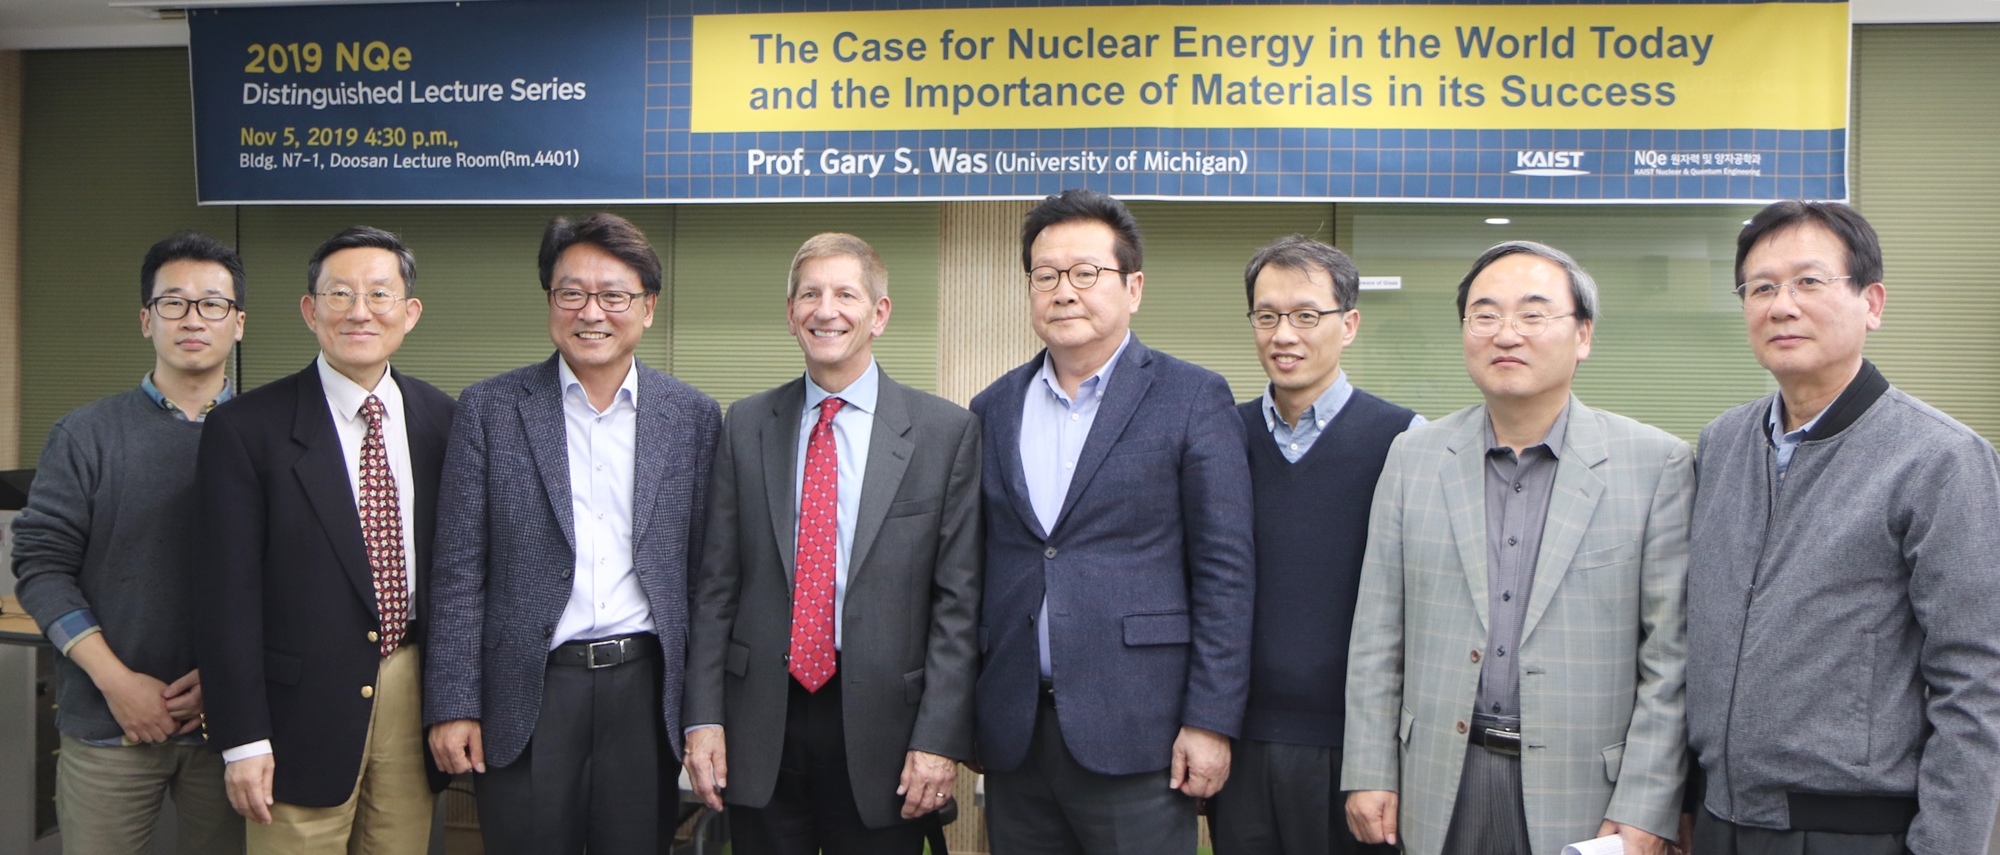 KAIST 원자력및양자공학과의 'Distinguished Lecture Series'는 2014년부터 시작돼 올해로 6회째를 맞았다. <사진=김인한 기자>